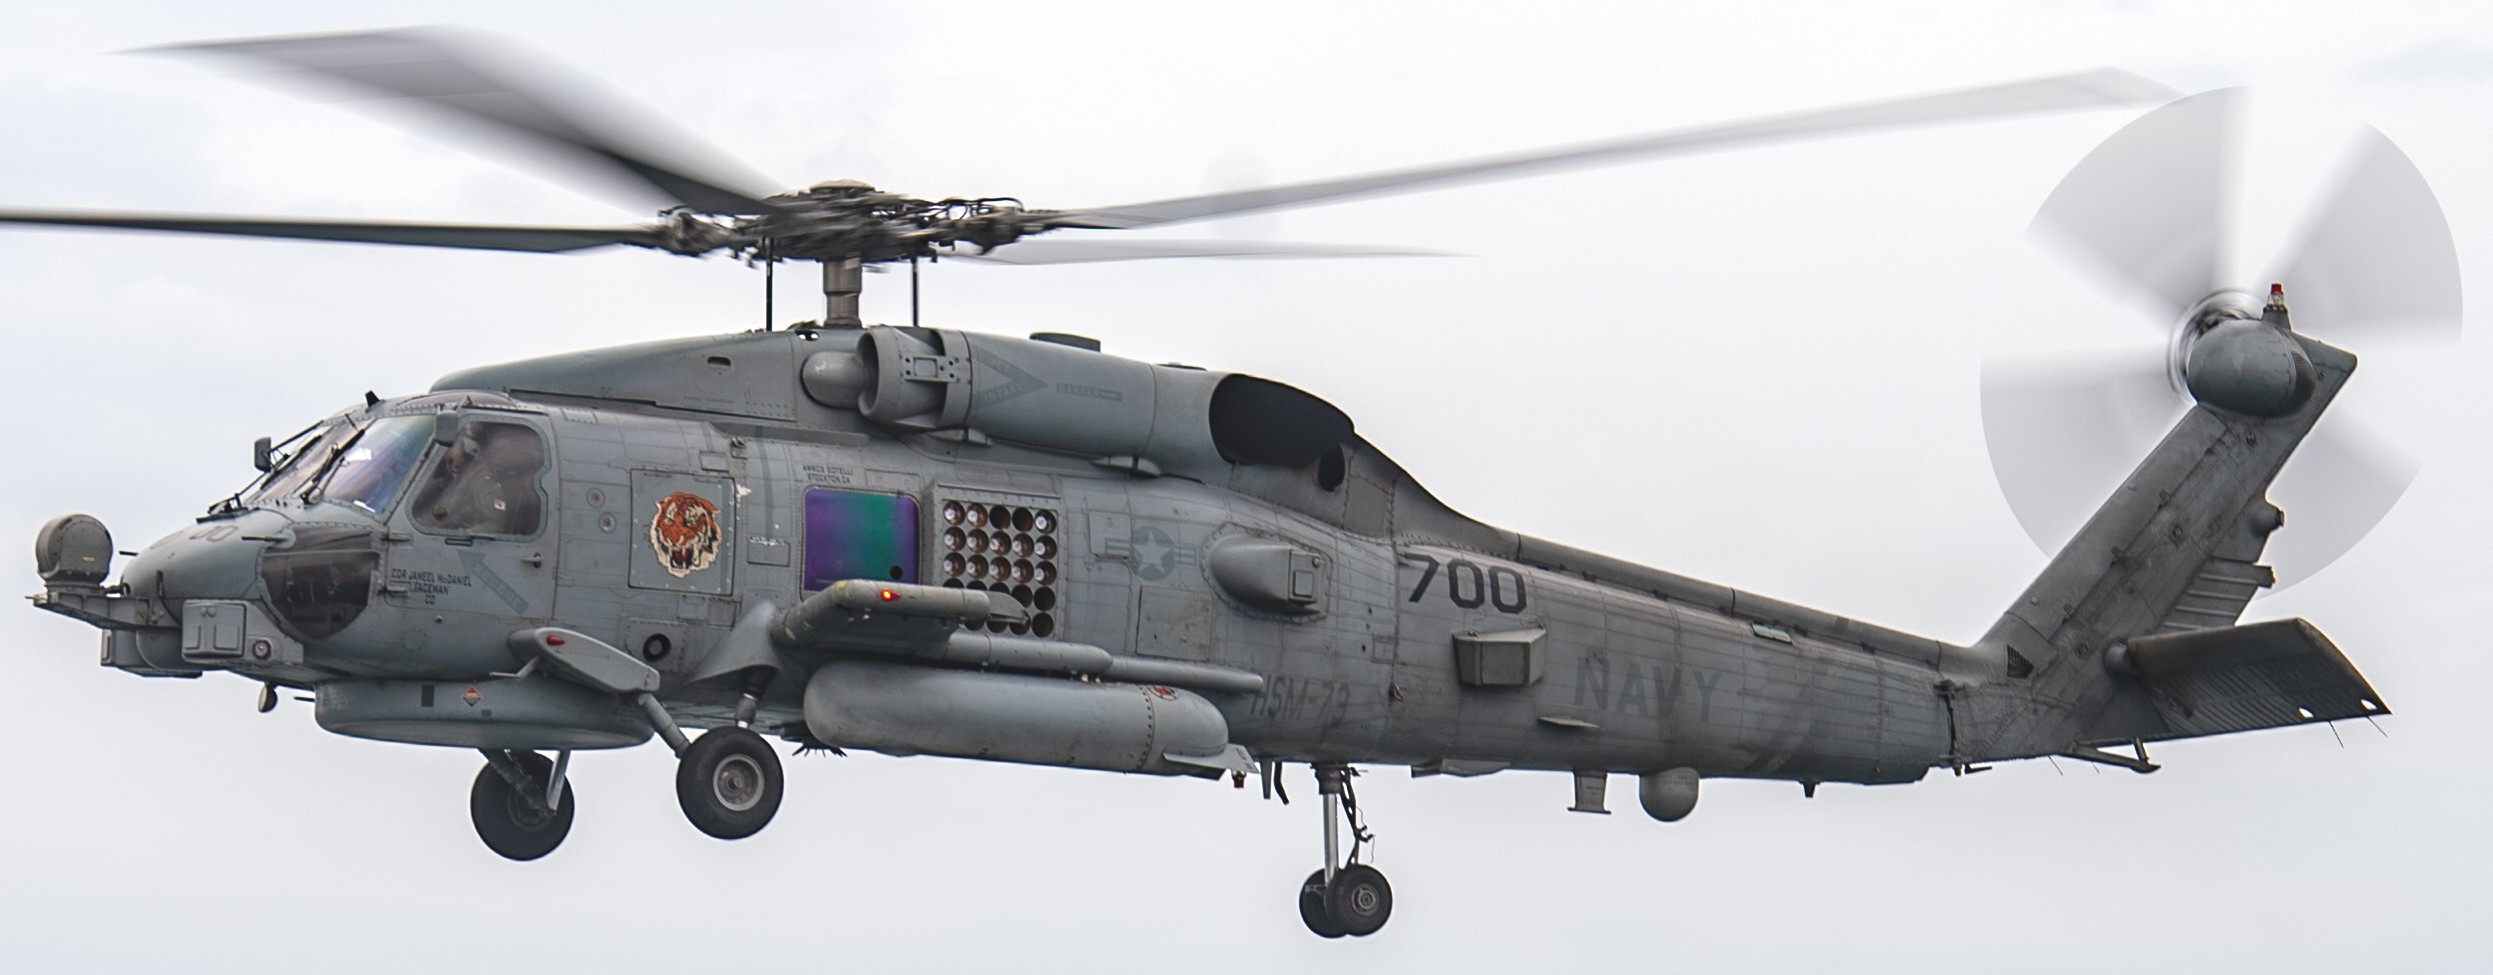 hsm-73 battlecats helicopter maritime strike squadron mh-60r seahawk cvw-17 cvn-68 uss nimitz 103